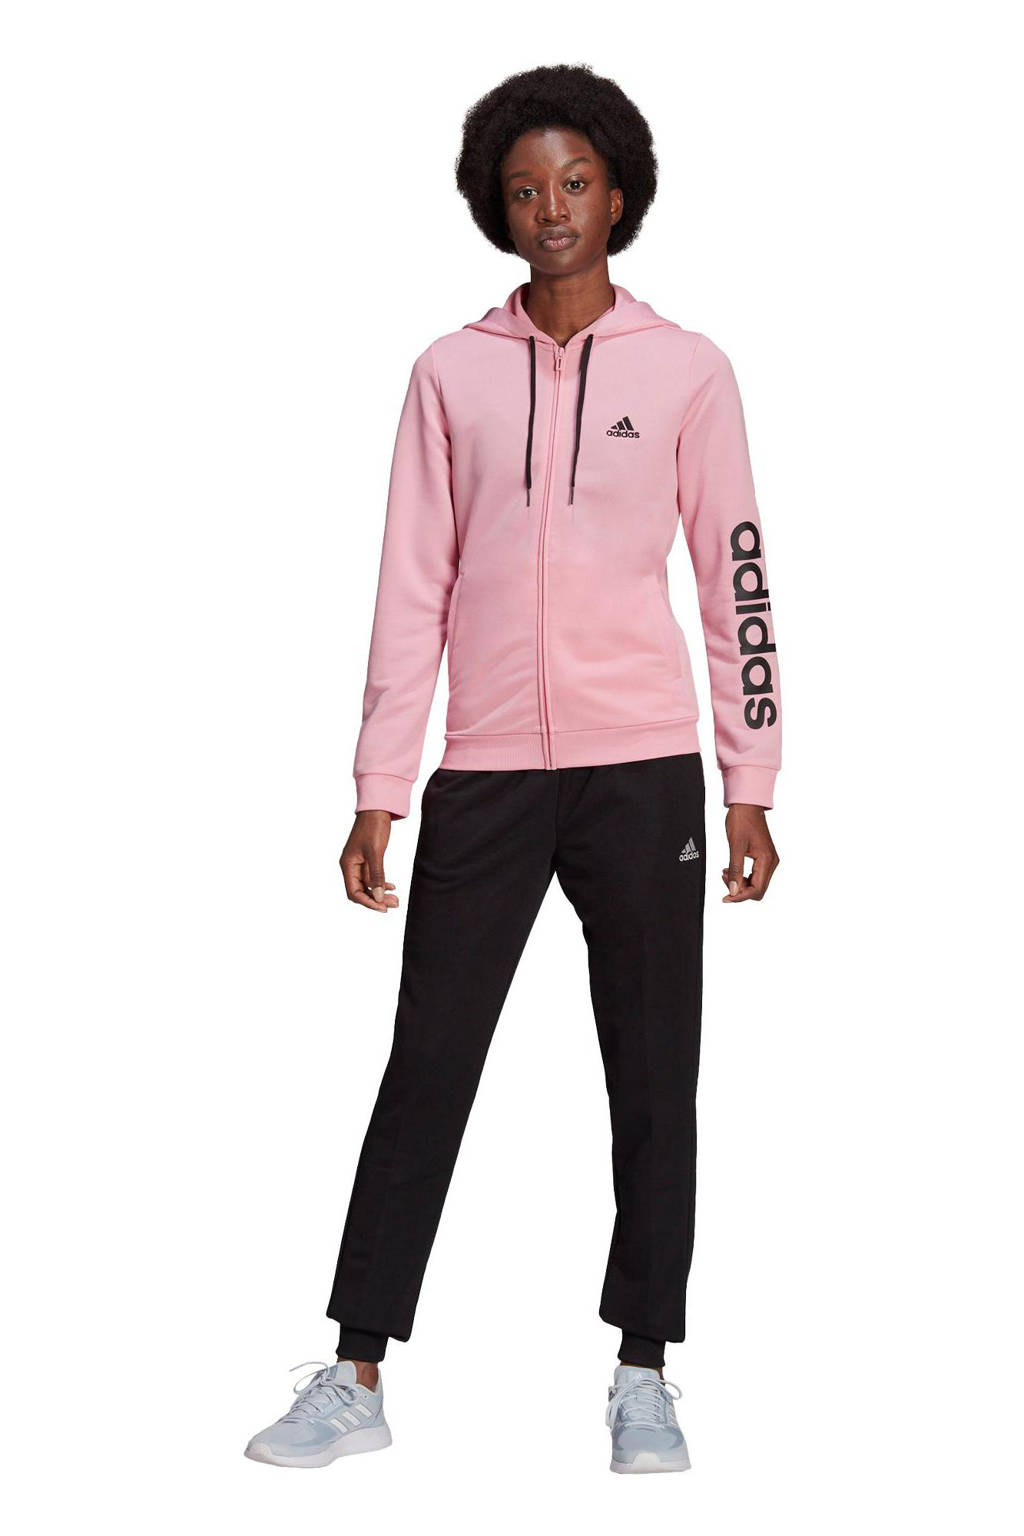 adidas Performance trainingspak roze/zwart, Roze/zwart